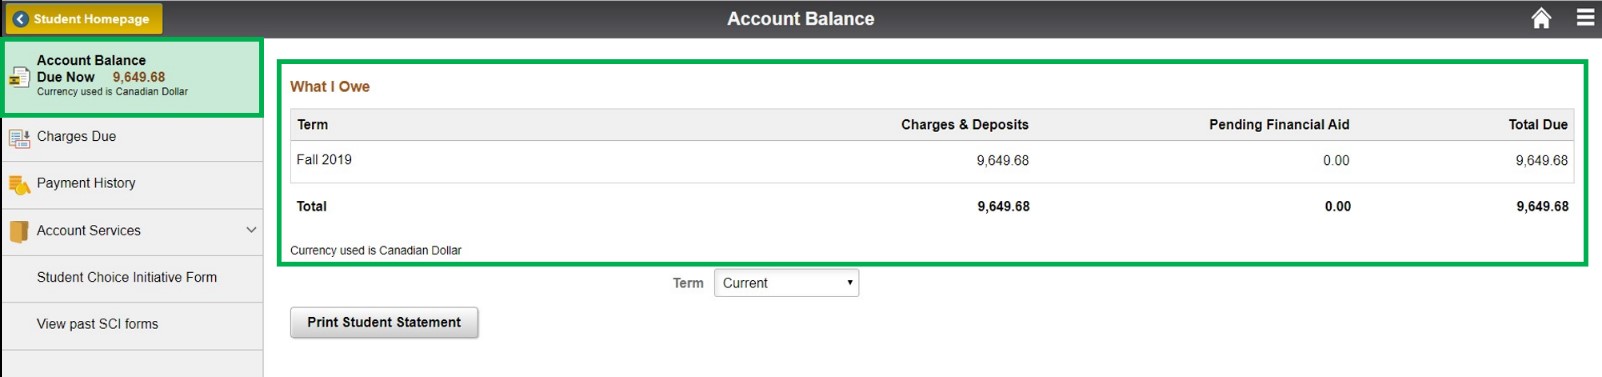 Account balance